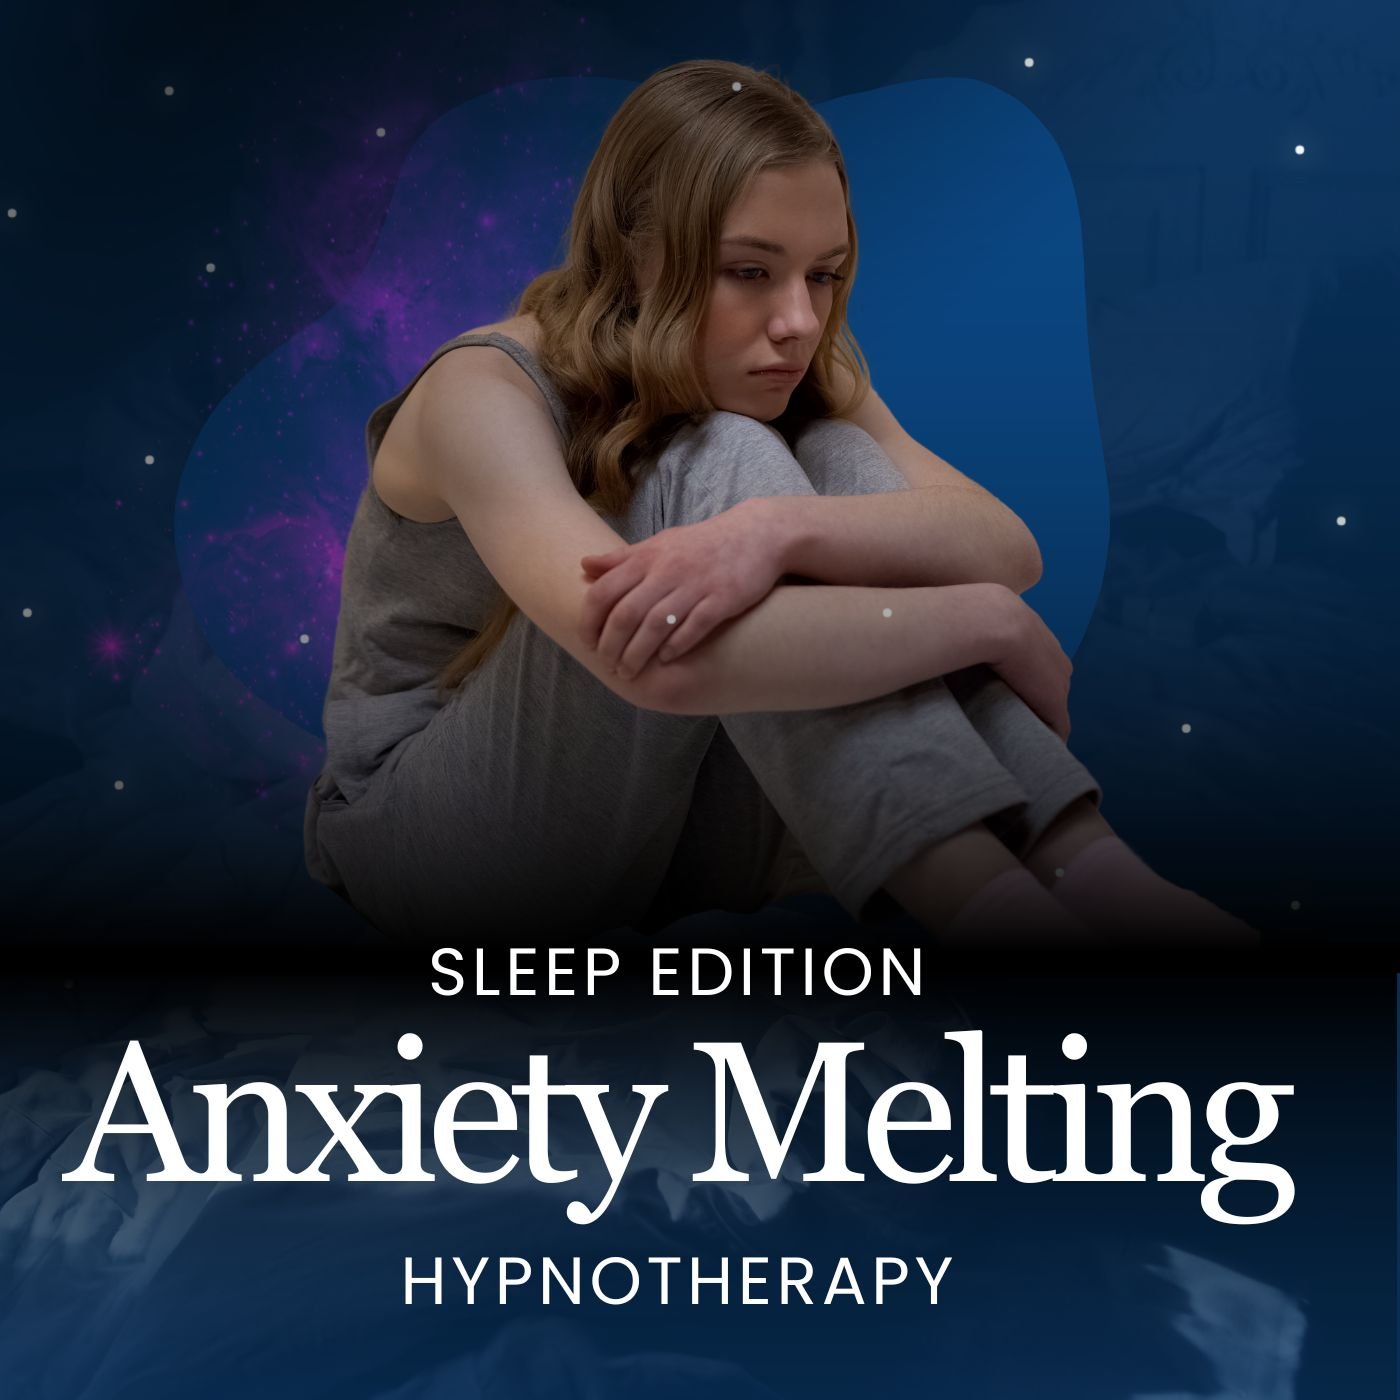 Melt to Sleep Hypnotherapy Essentials Pack - Clearmindshypnotherapy